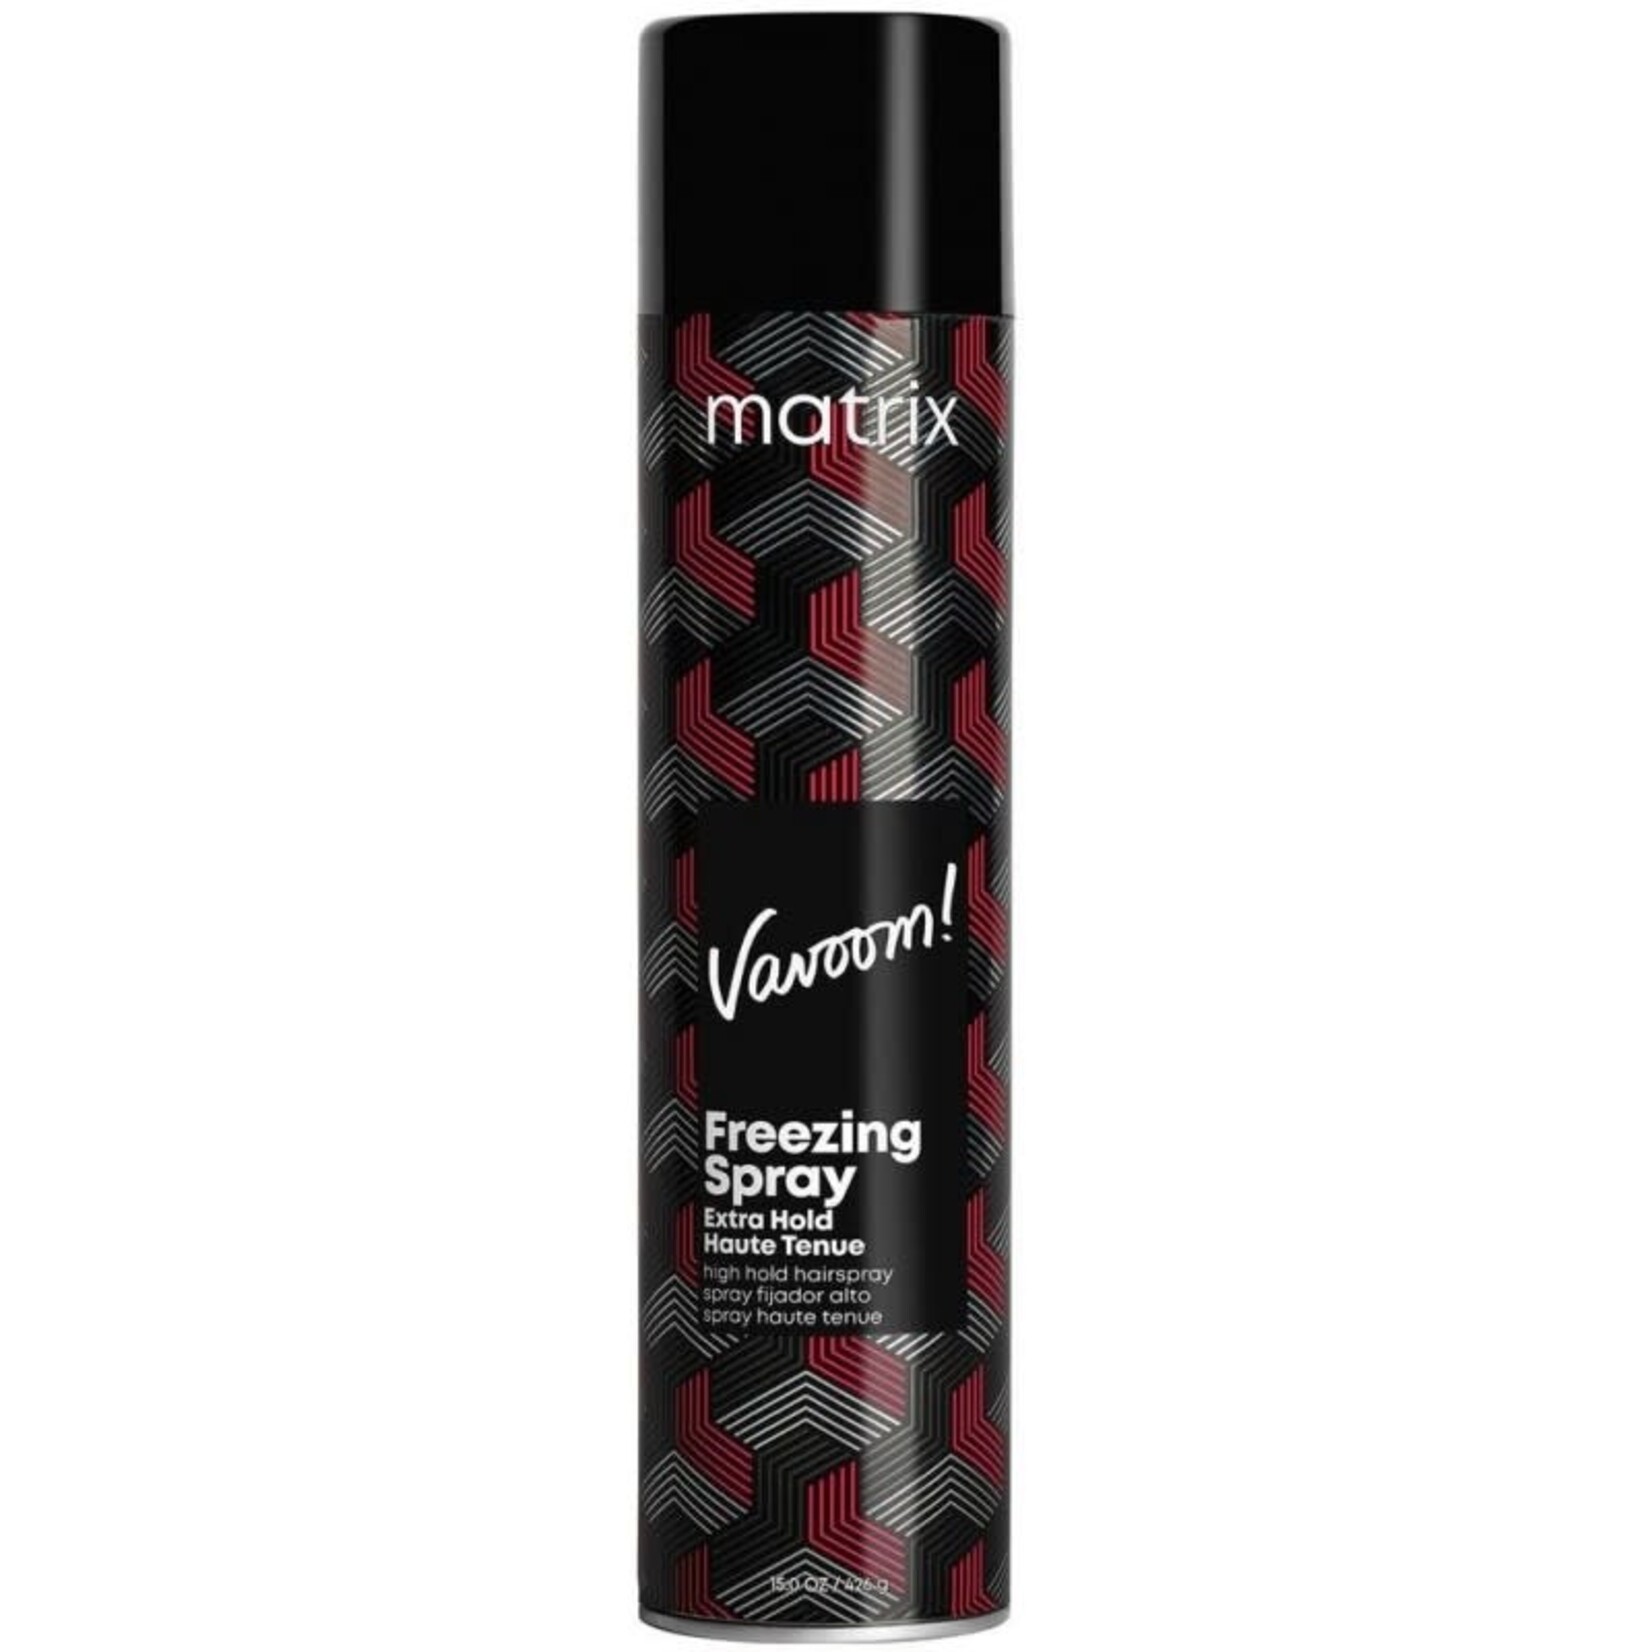 Matrix Matrix - Vavoom - Freezing Spray 426g